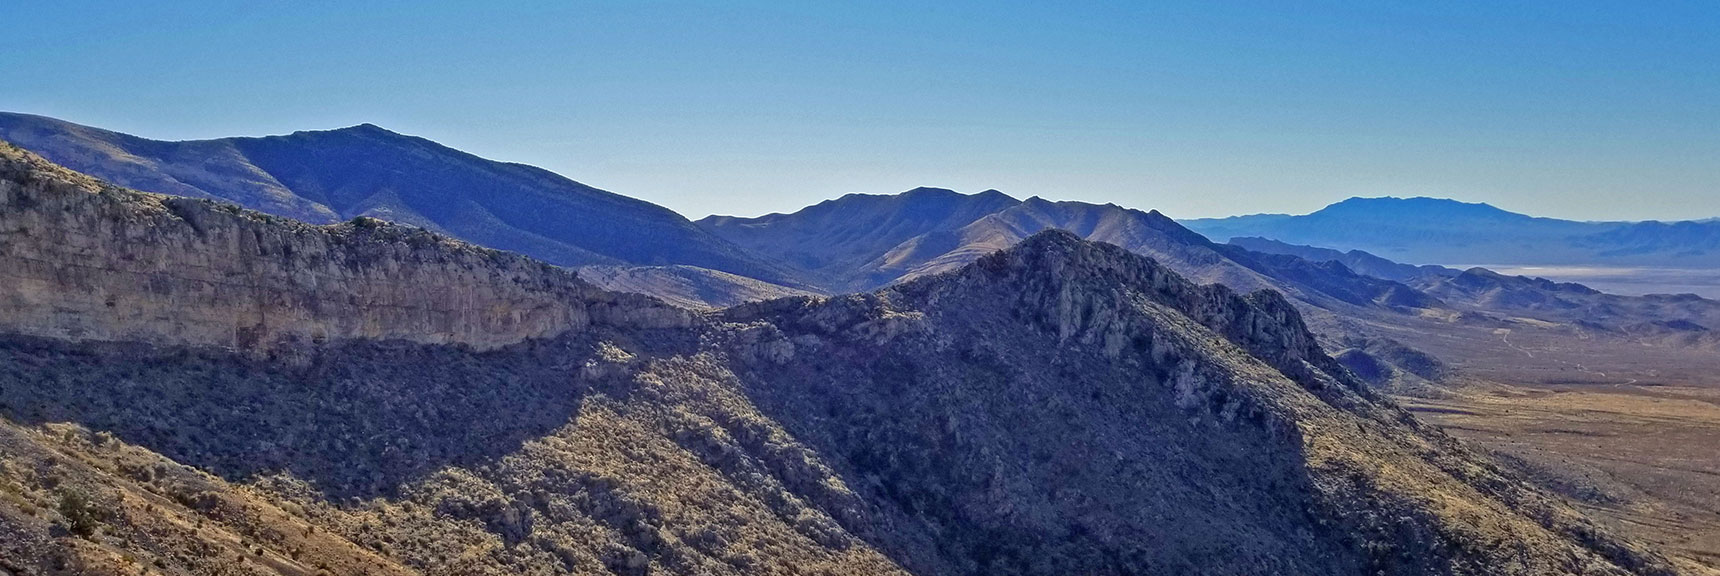 View Southwest from the Spine of the Western Cliffs Ridge | Potosi Mt. Summit via Western Cliffs Ridgeline, Spring Mountains, Nevada